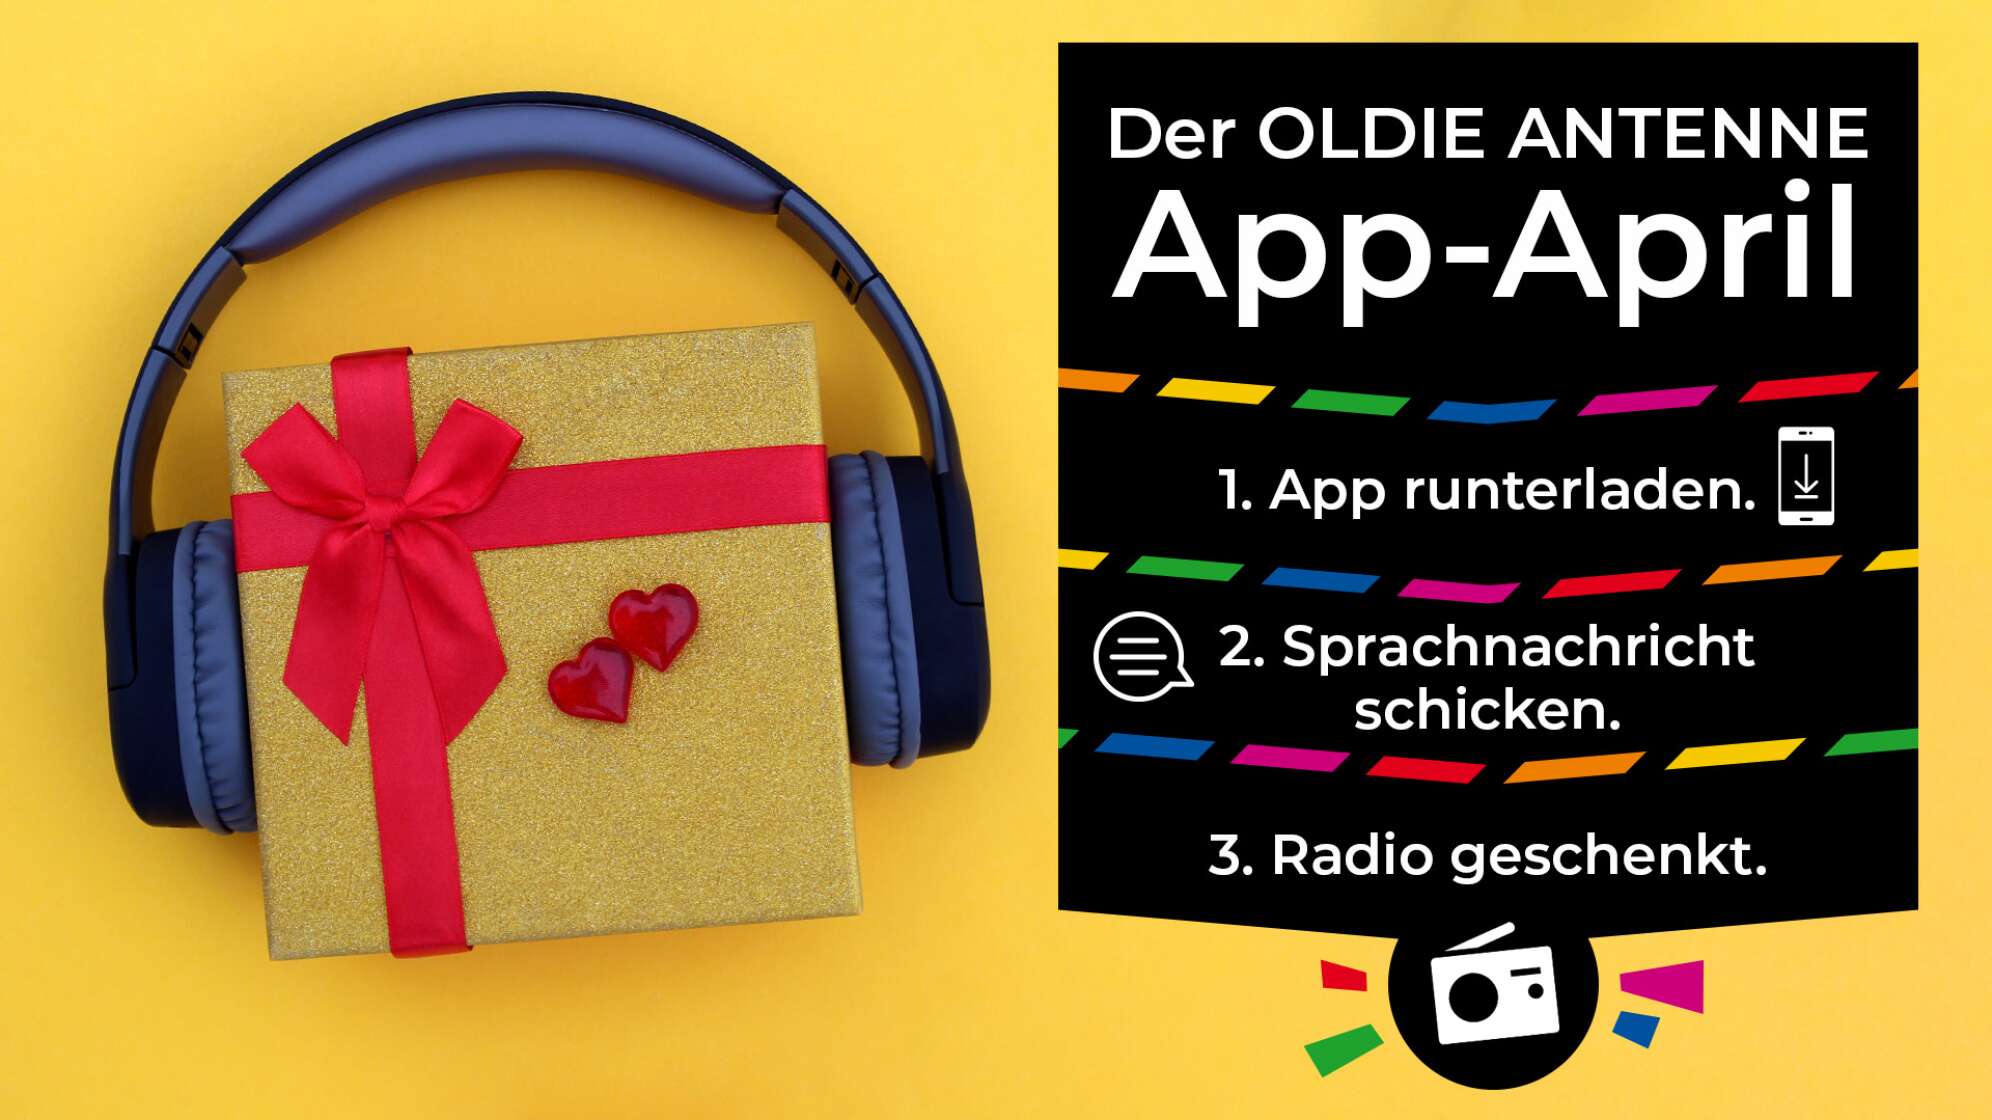 Der OLDIE ANTENNE App-April